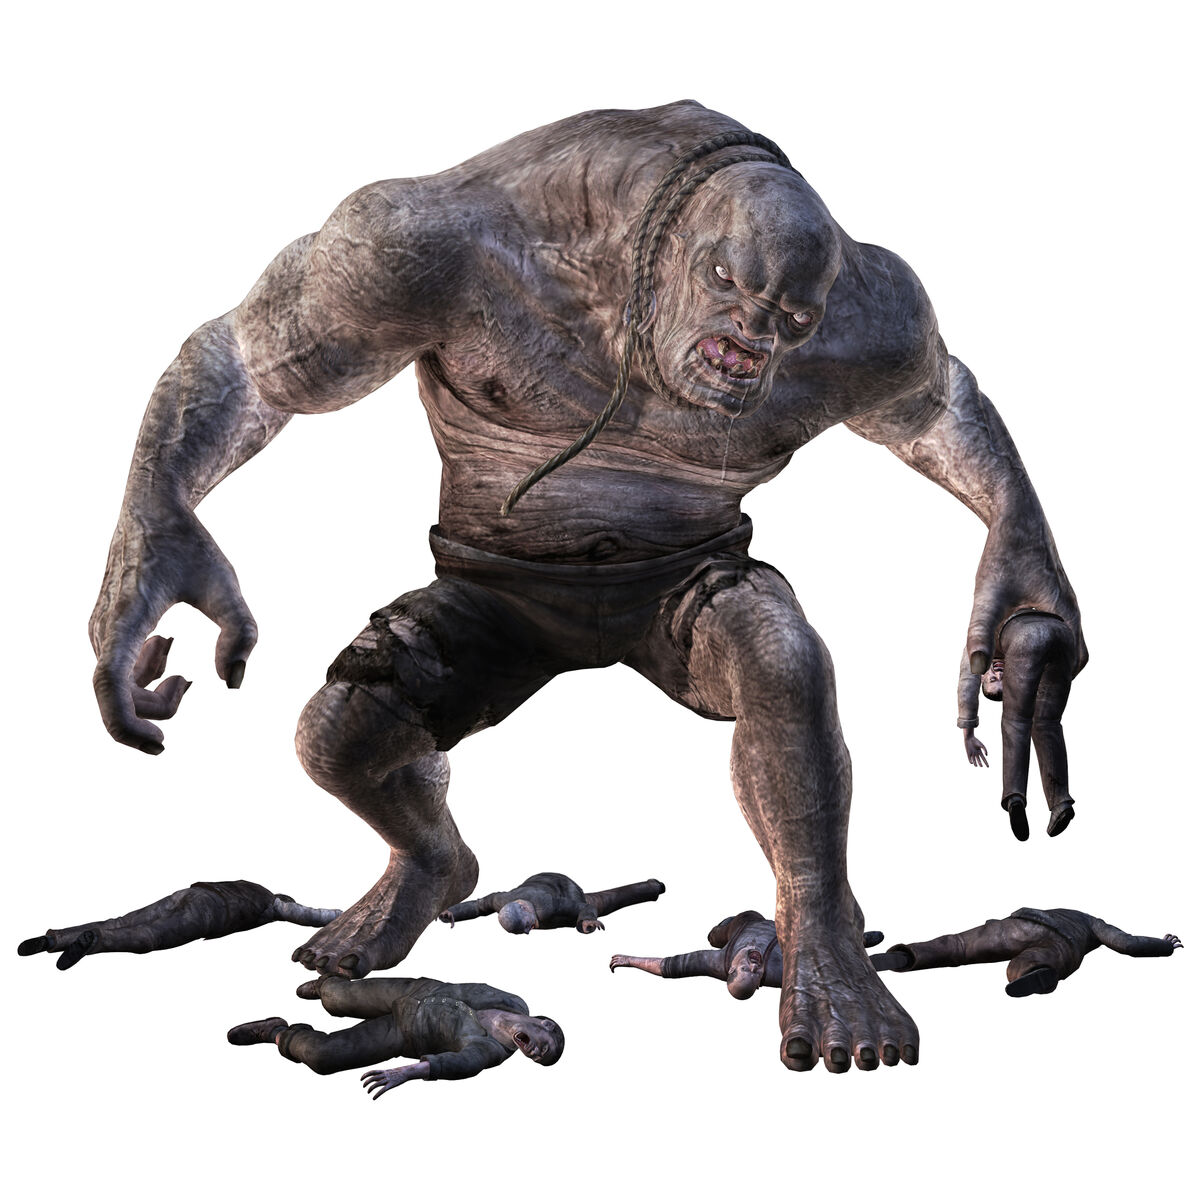 Resident Evil 4: Mobile 100% (Modo Extremo) El Gigante #4 